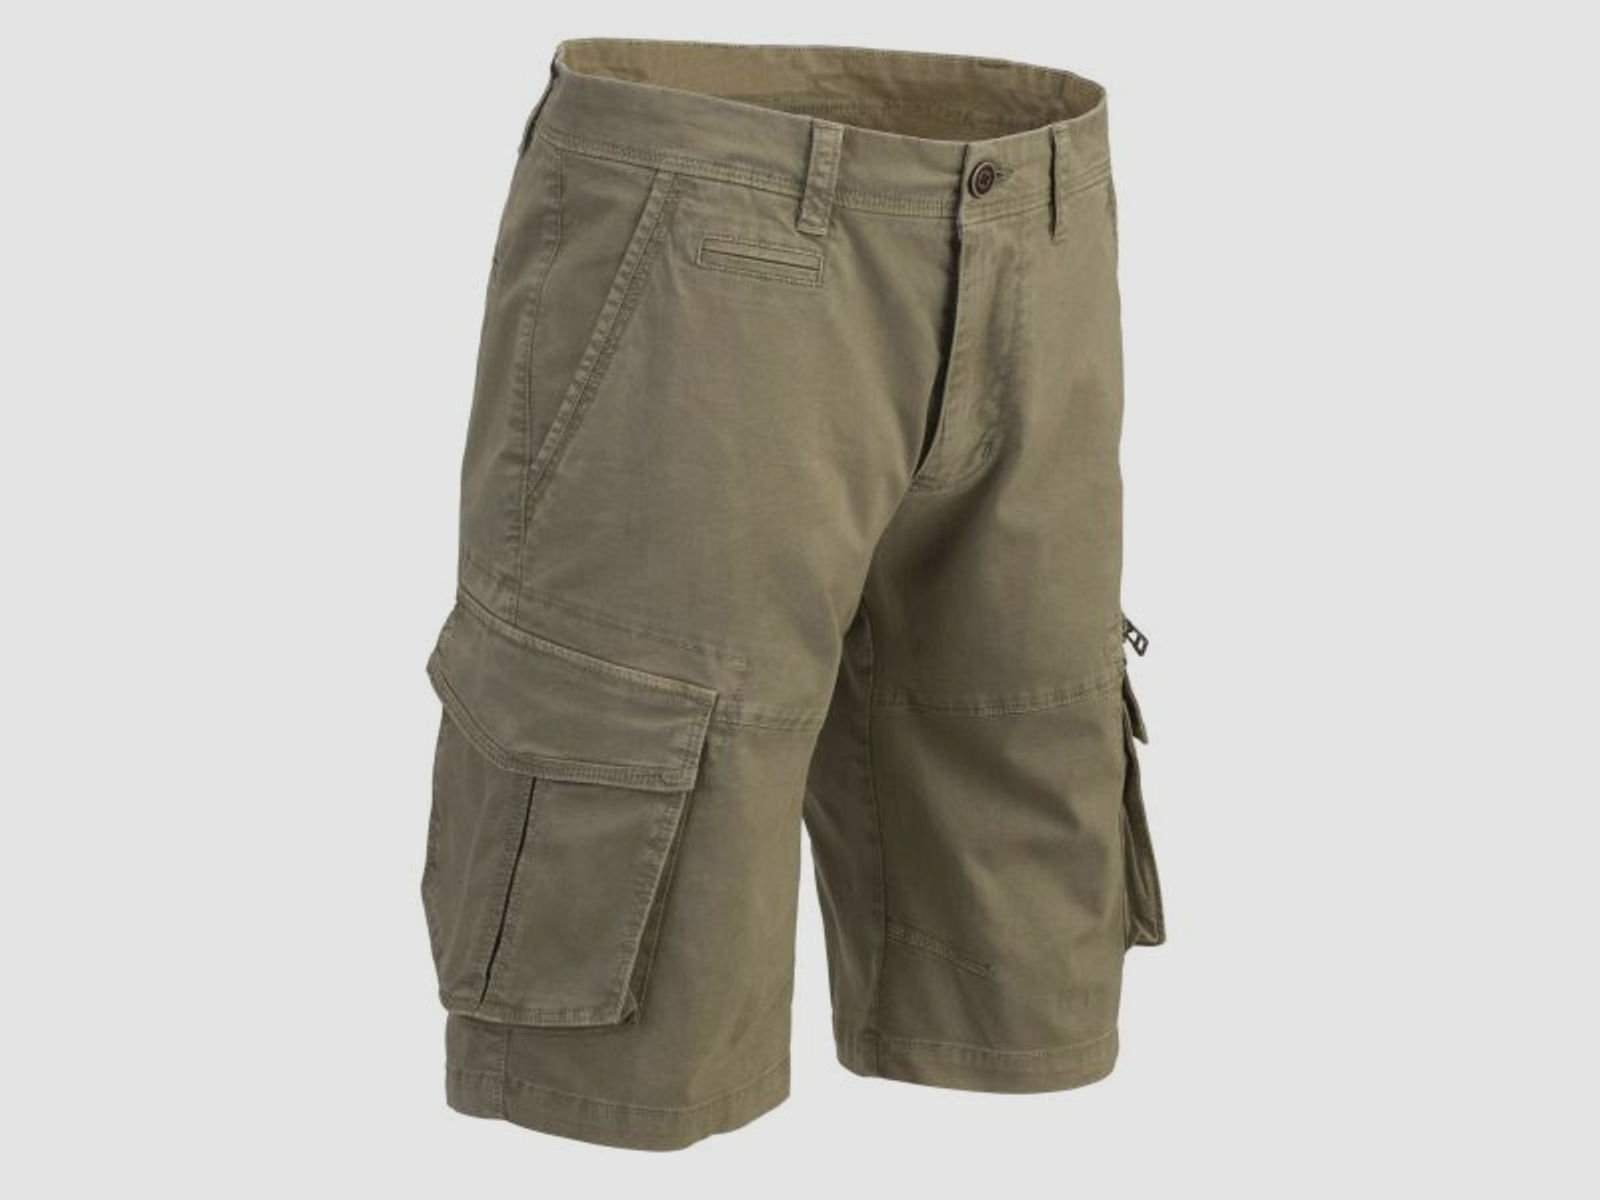 Defcon 5 Defcon 5 Shorts Cargo Pant light khaki